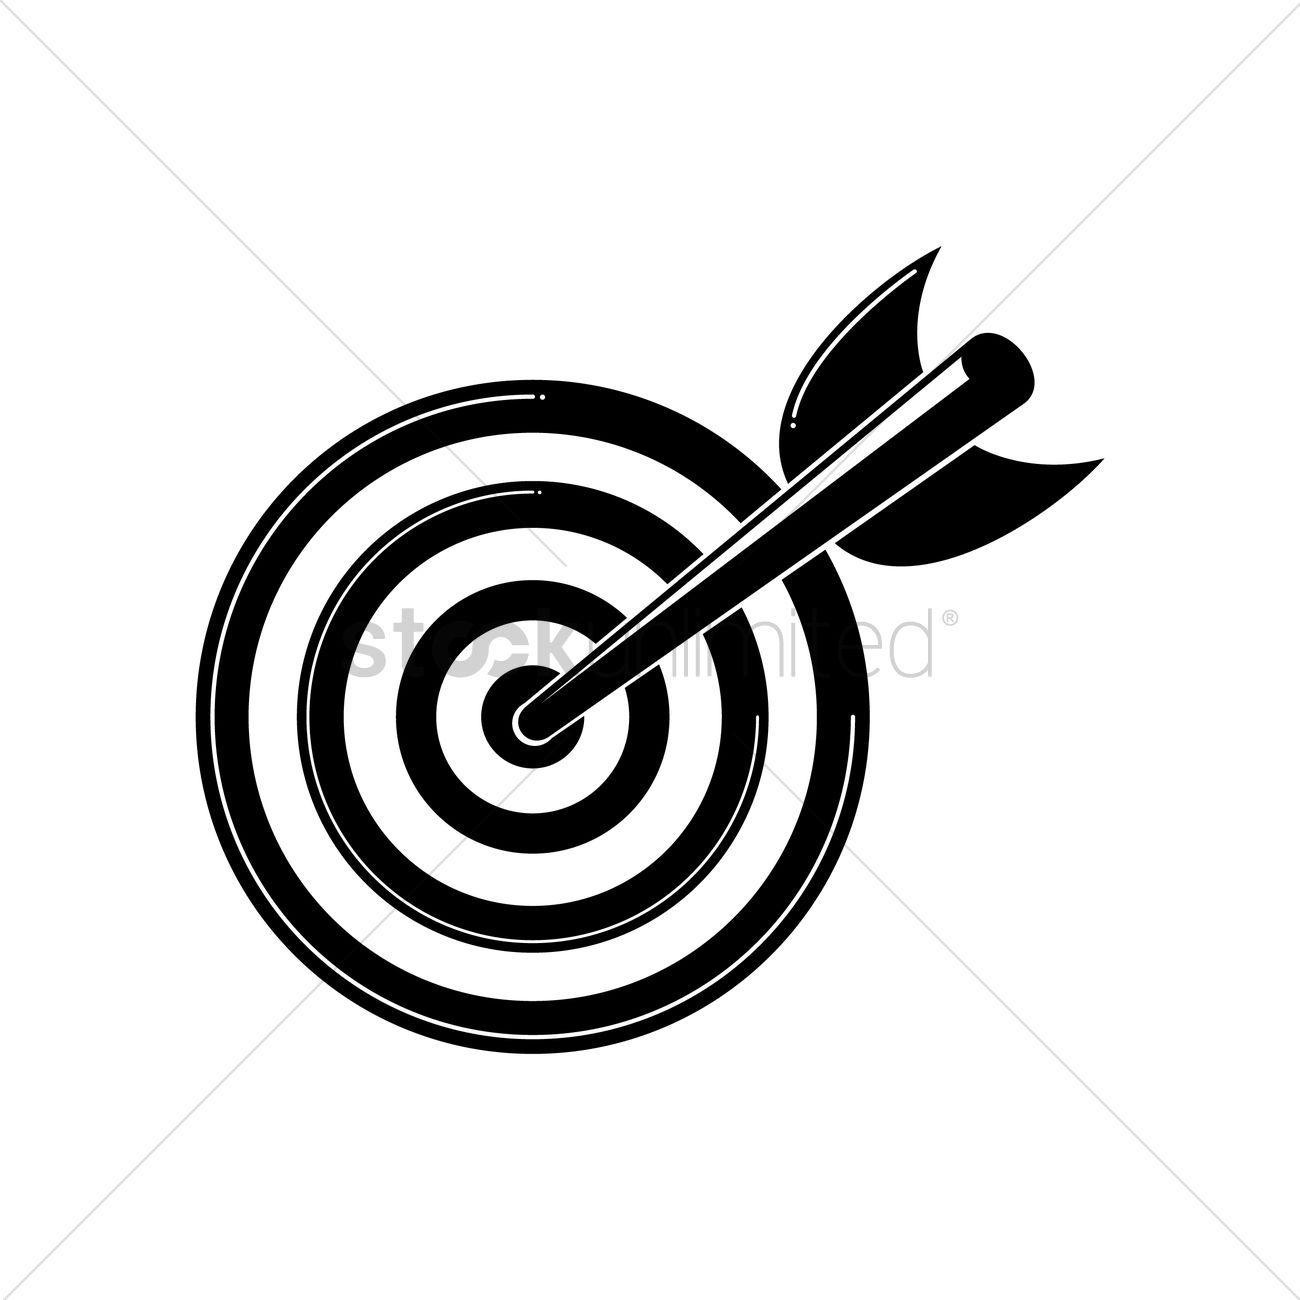 Black and White Bullseye Logo - Bullseye with arrow icon Vector Image - 1937856 | StockUnlimited